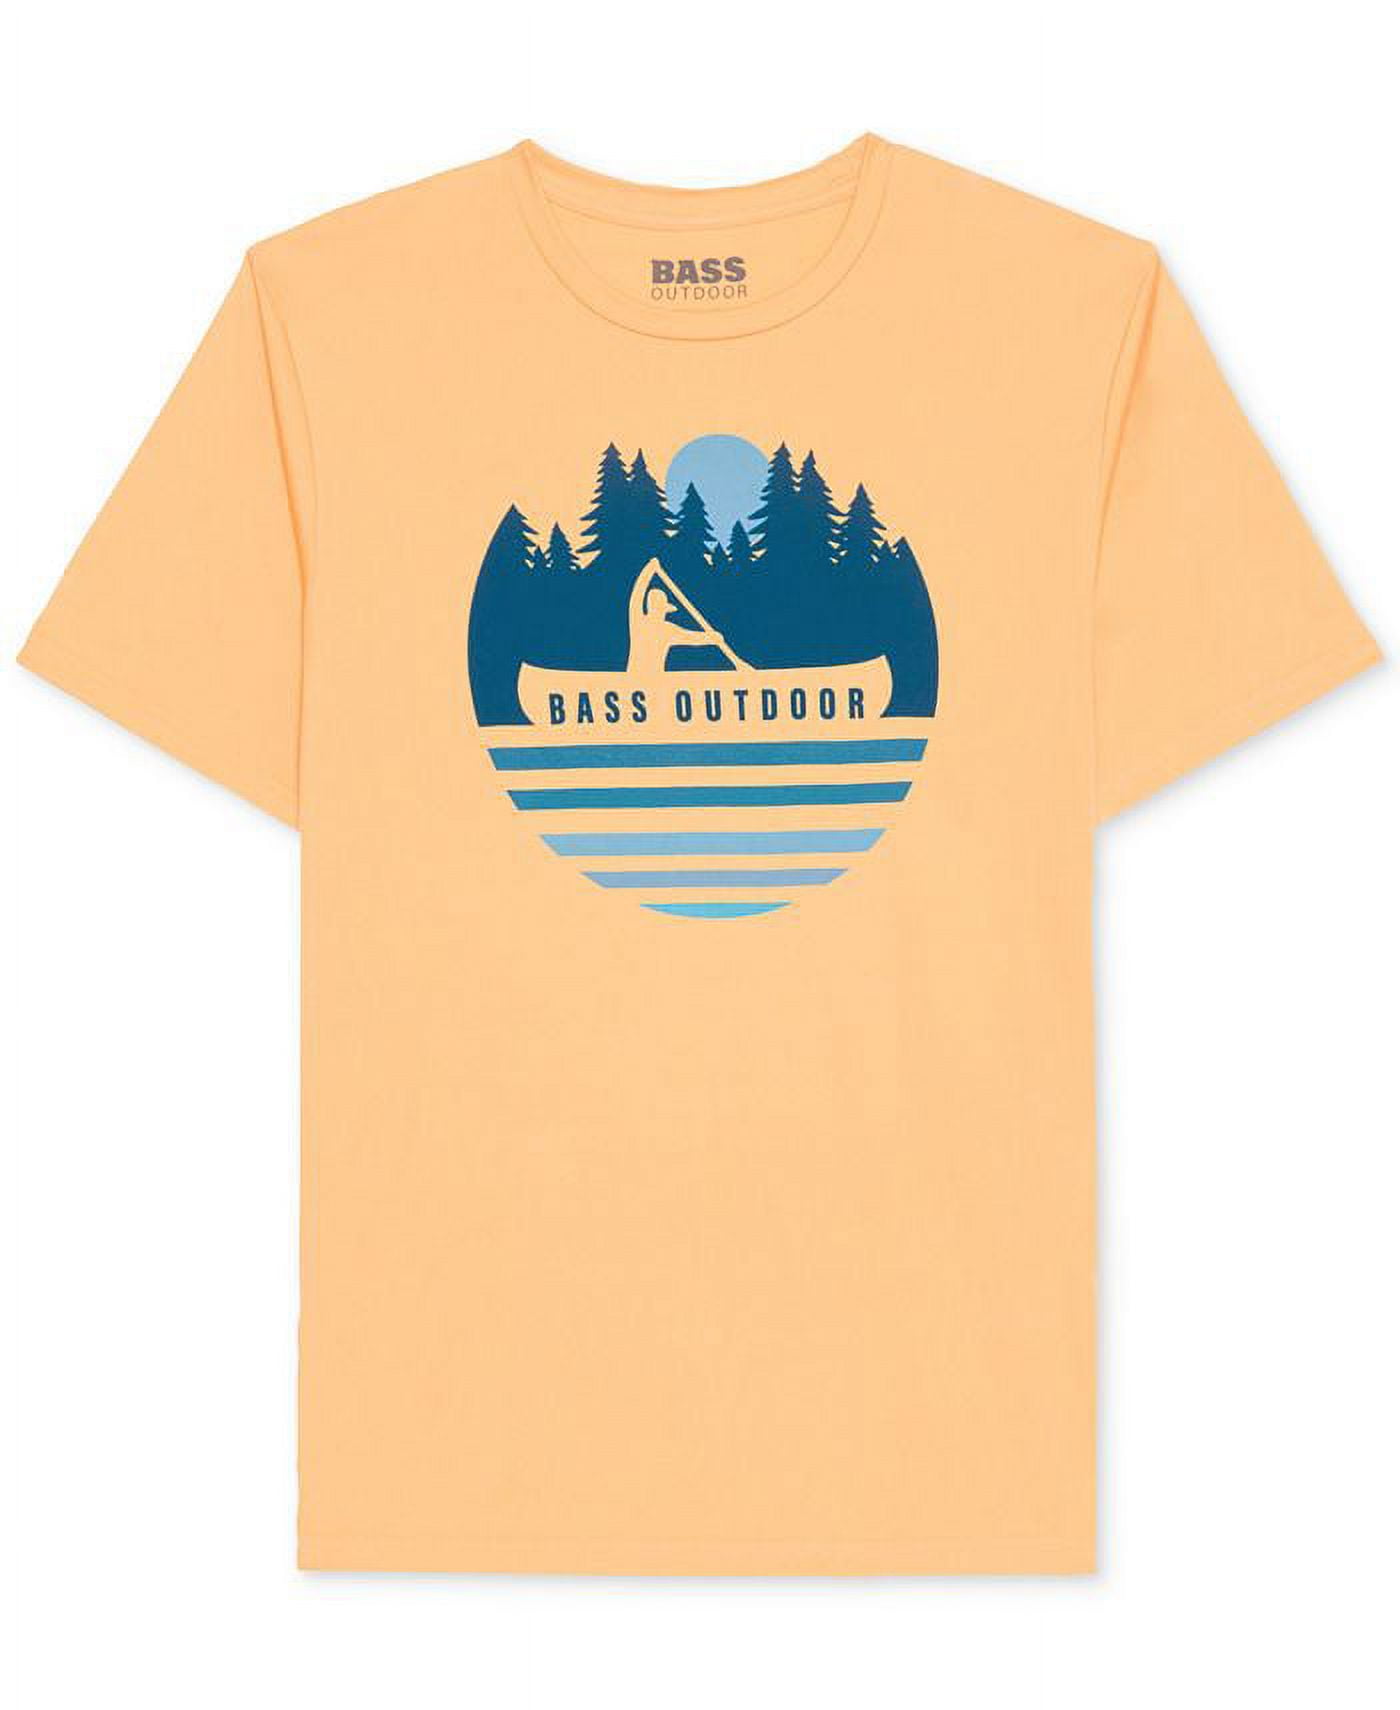 Bass Outdoor Men's Logo Graphic Tech T-Shirt Orange Size XX-Large